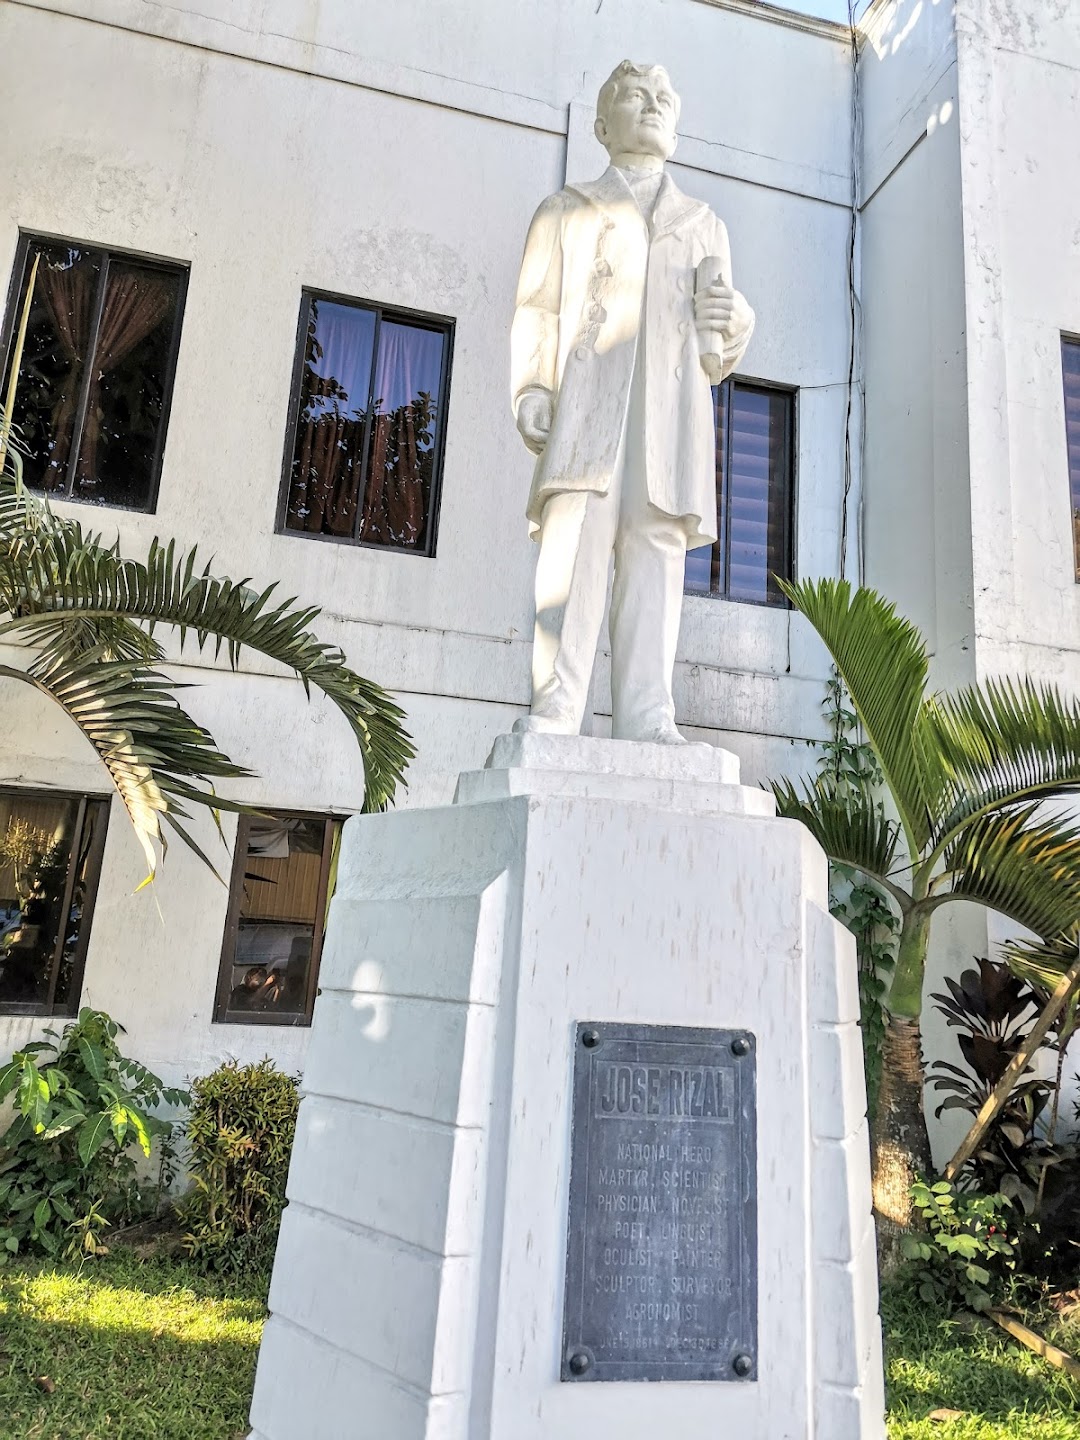 Jose Rizal Monument - Amadeo, Cavite